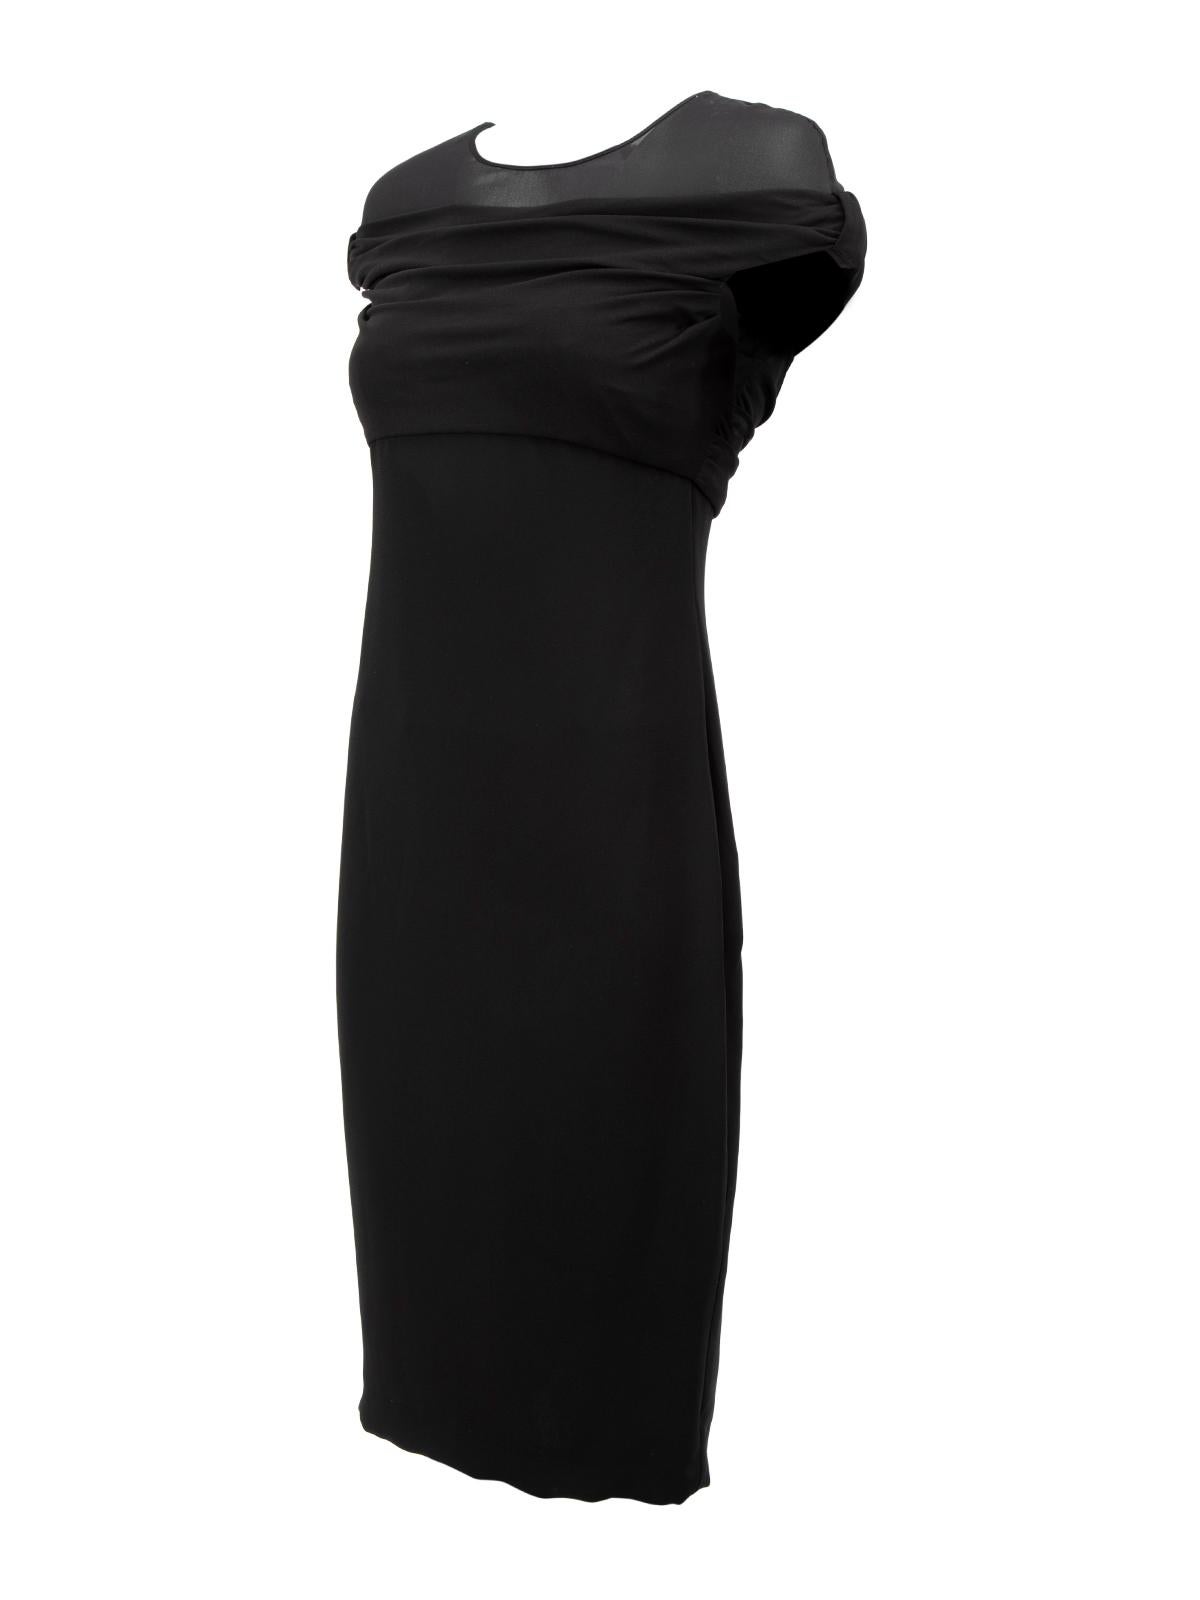 Pre-Loved Max Mara Women's Black Knee Length Silk Dress with Corset Inlay 1